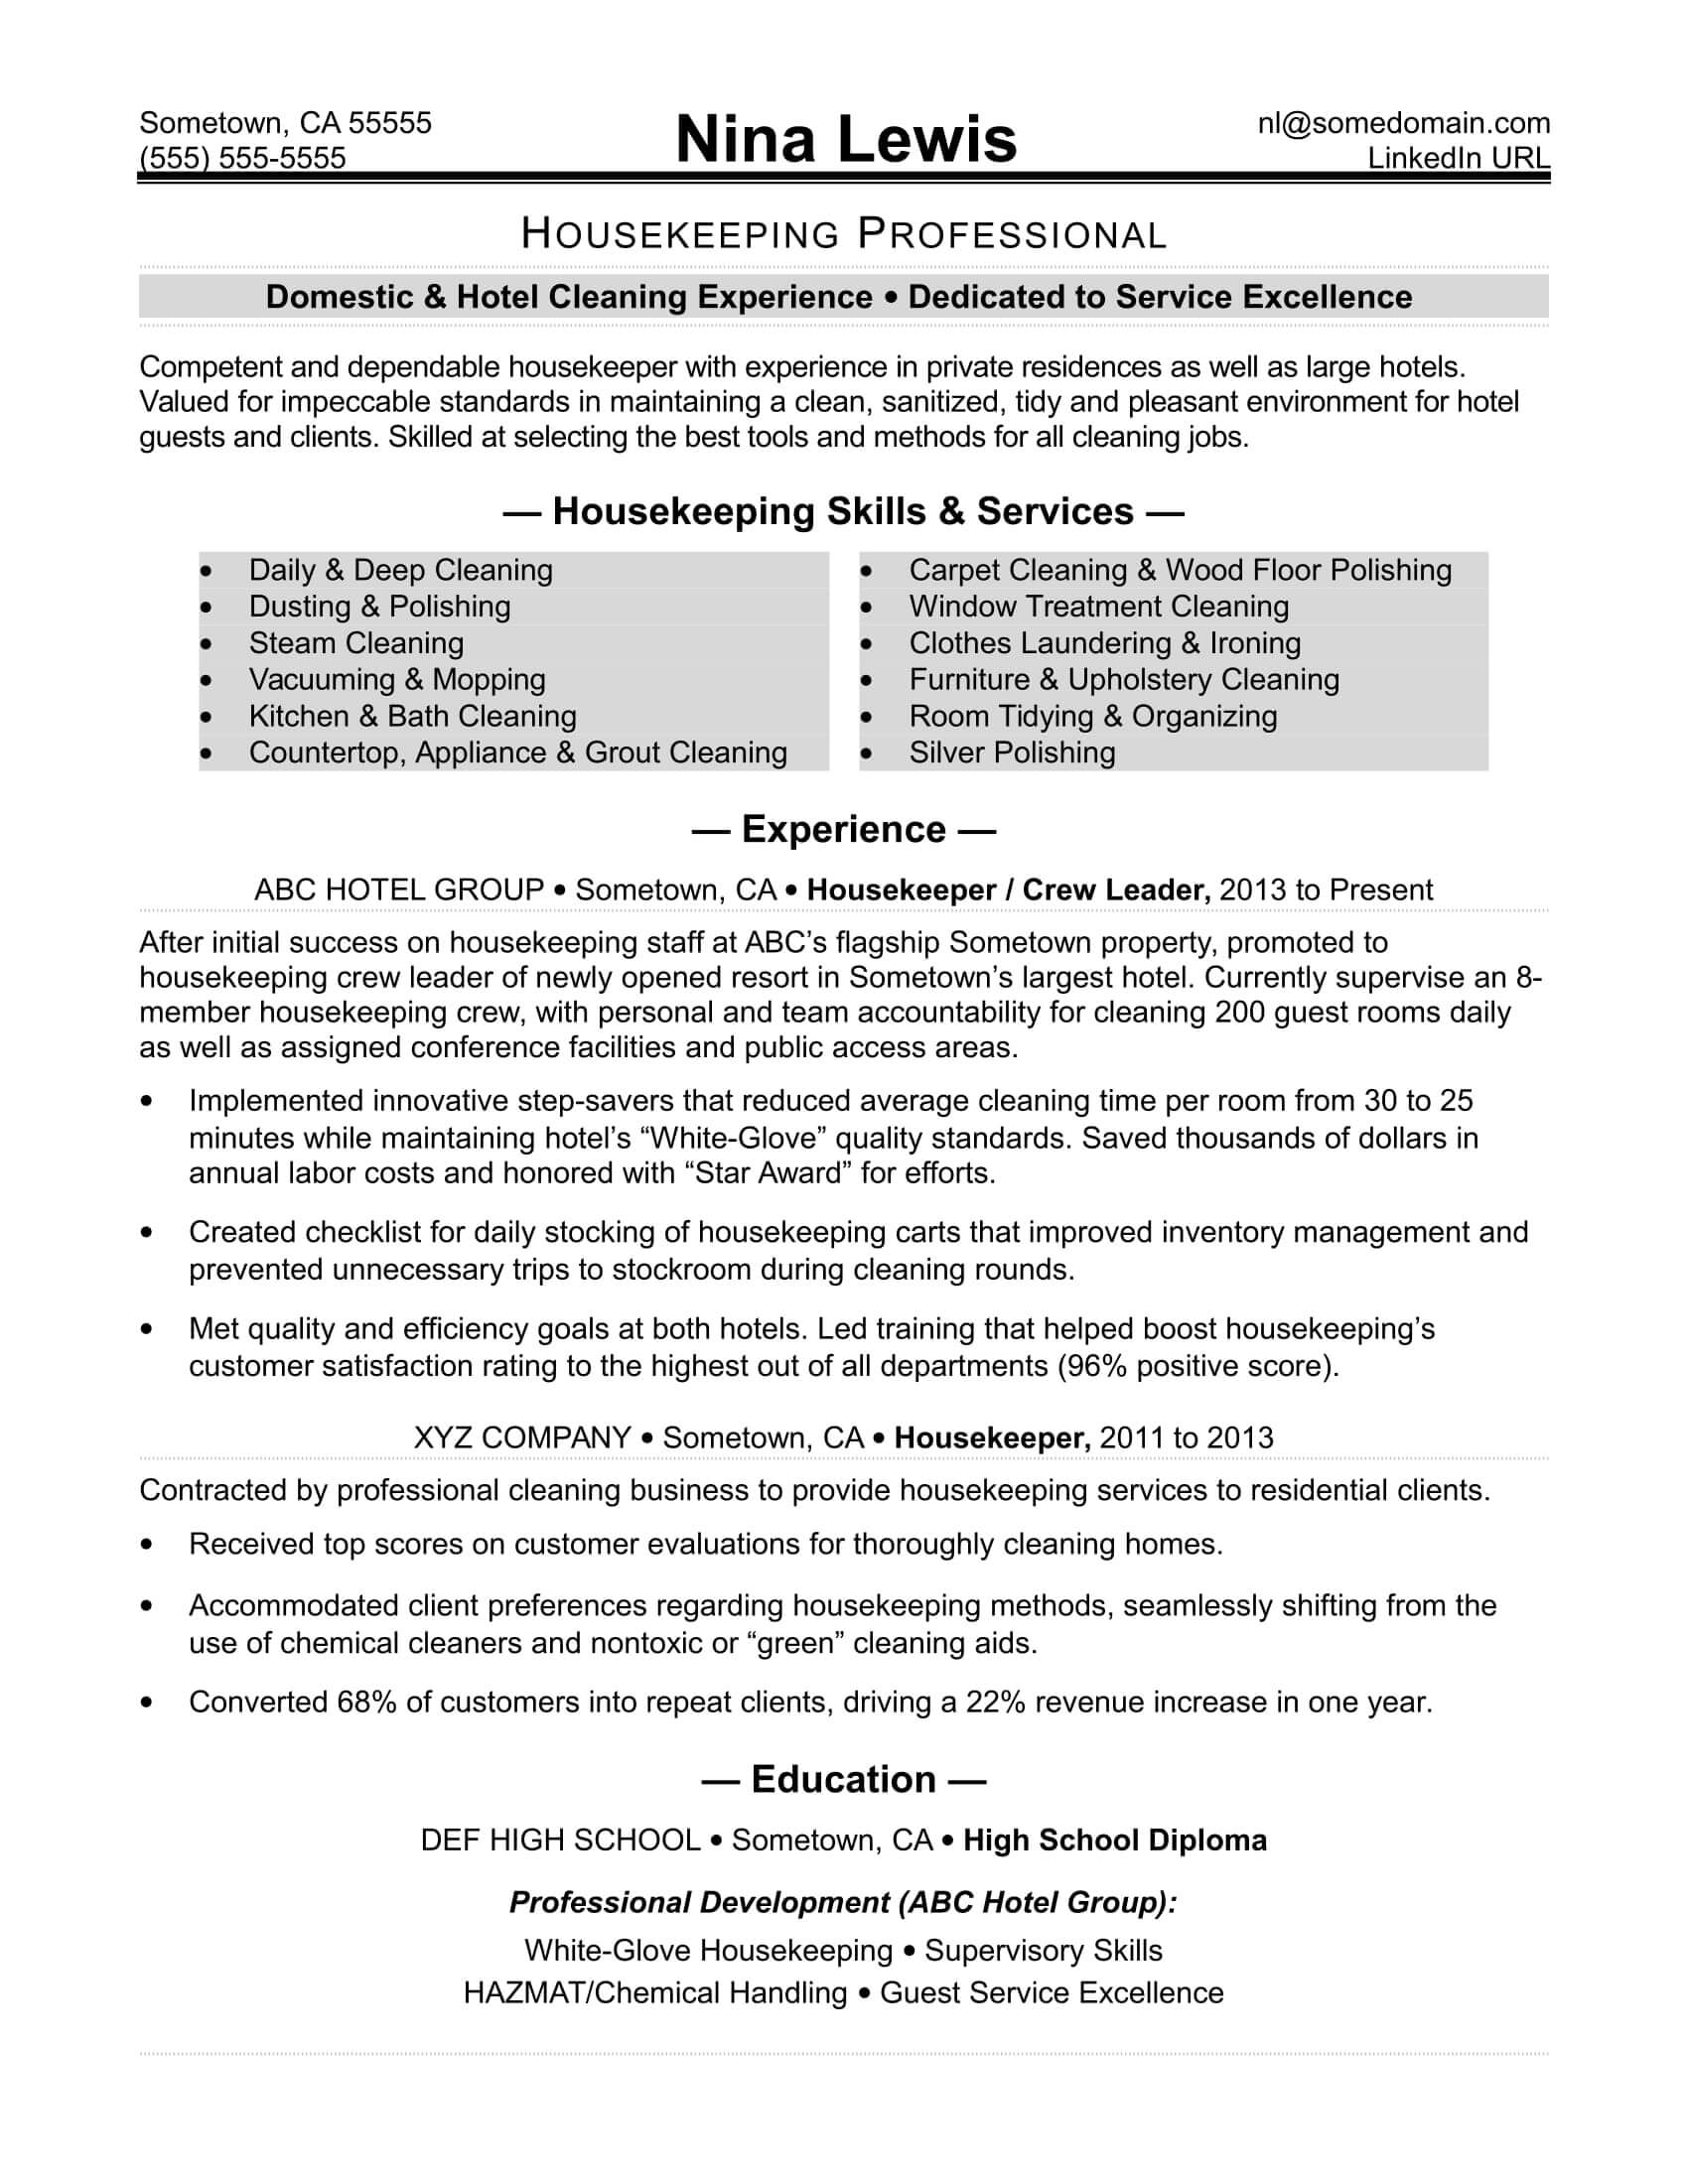 Housekeeping Resume Sample | Monster Pertaining To Resume Templates Word 2013